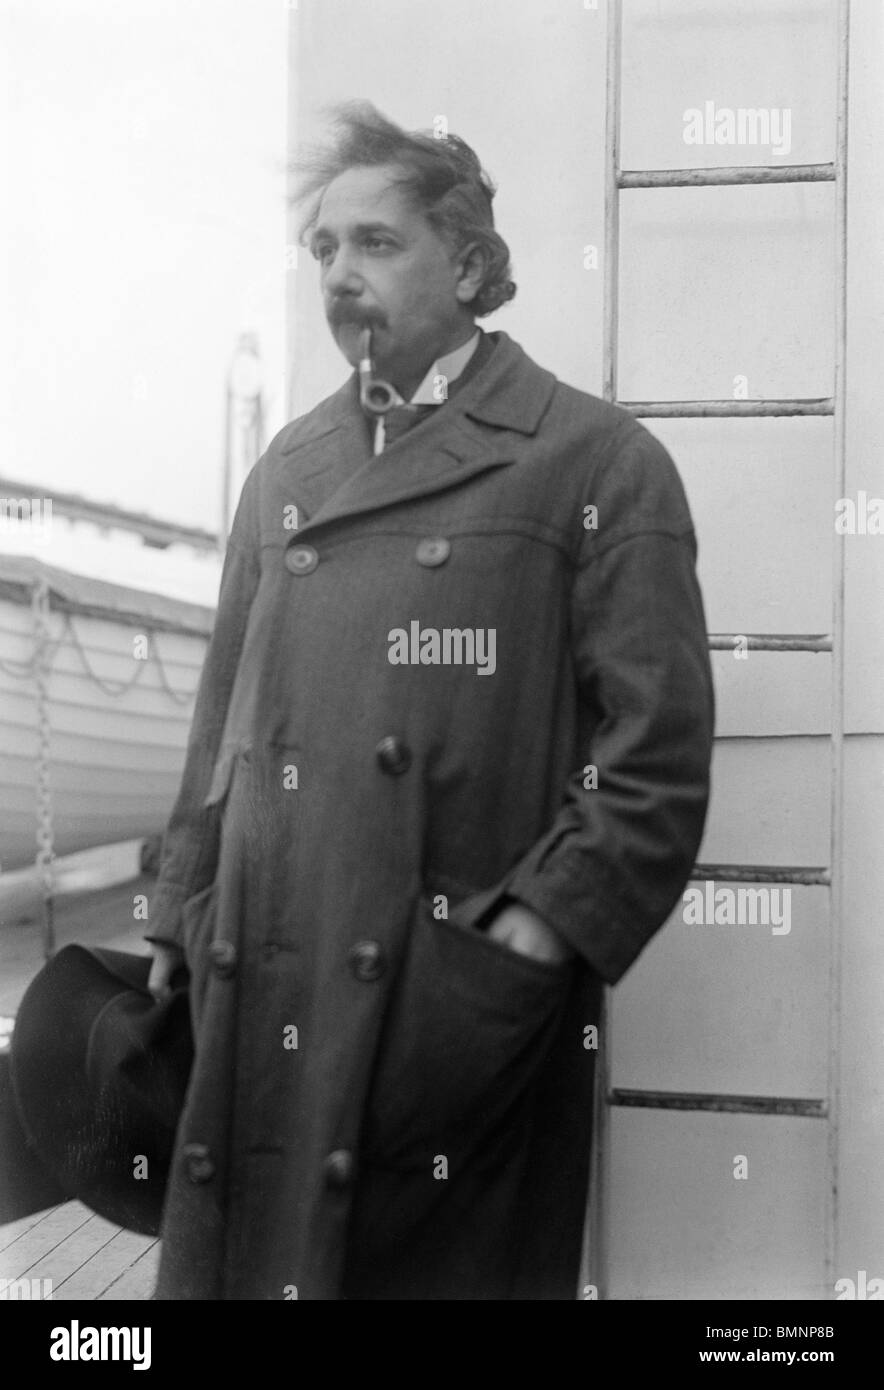 Photo c1920s of Albert Einstein (1879 - 1955) - the German theoretical physicist and Nobel Prize winner. Stock Photo